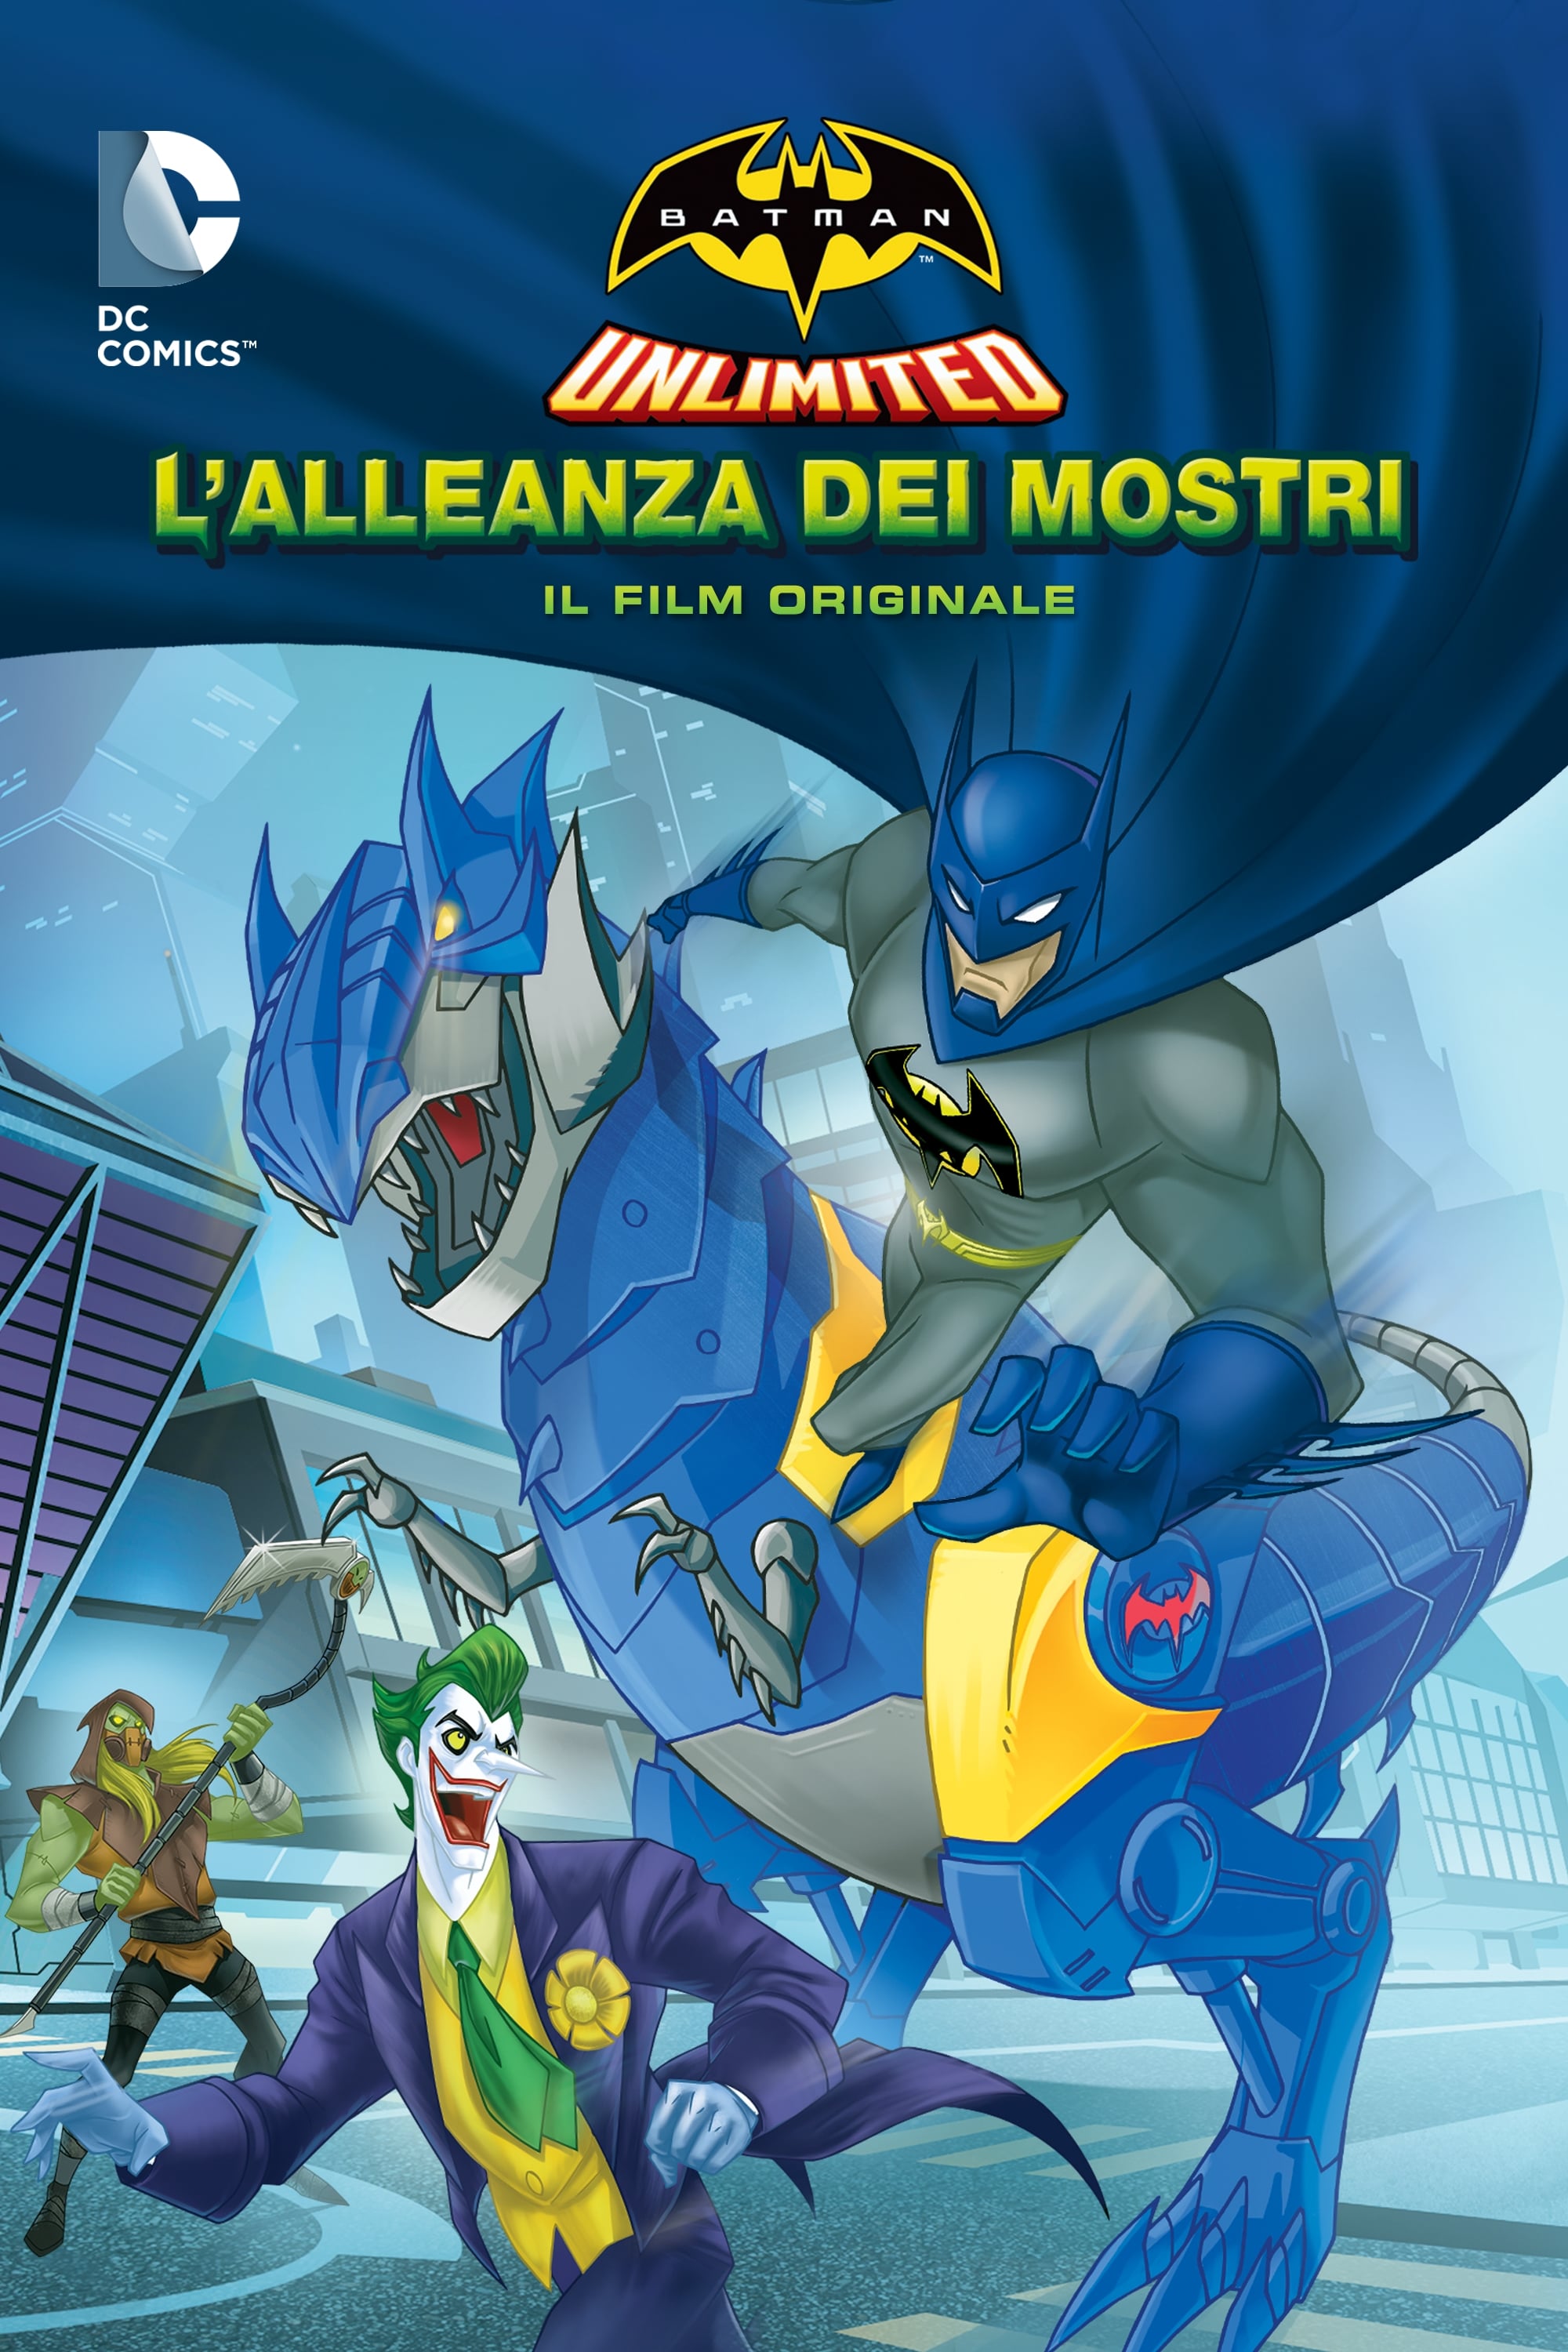 Batman Unlimited: L'alleanza dei mostri film